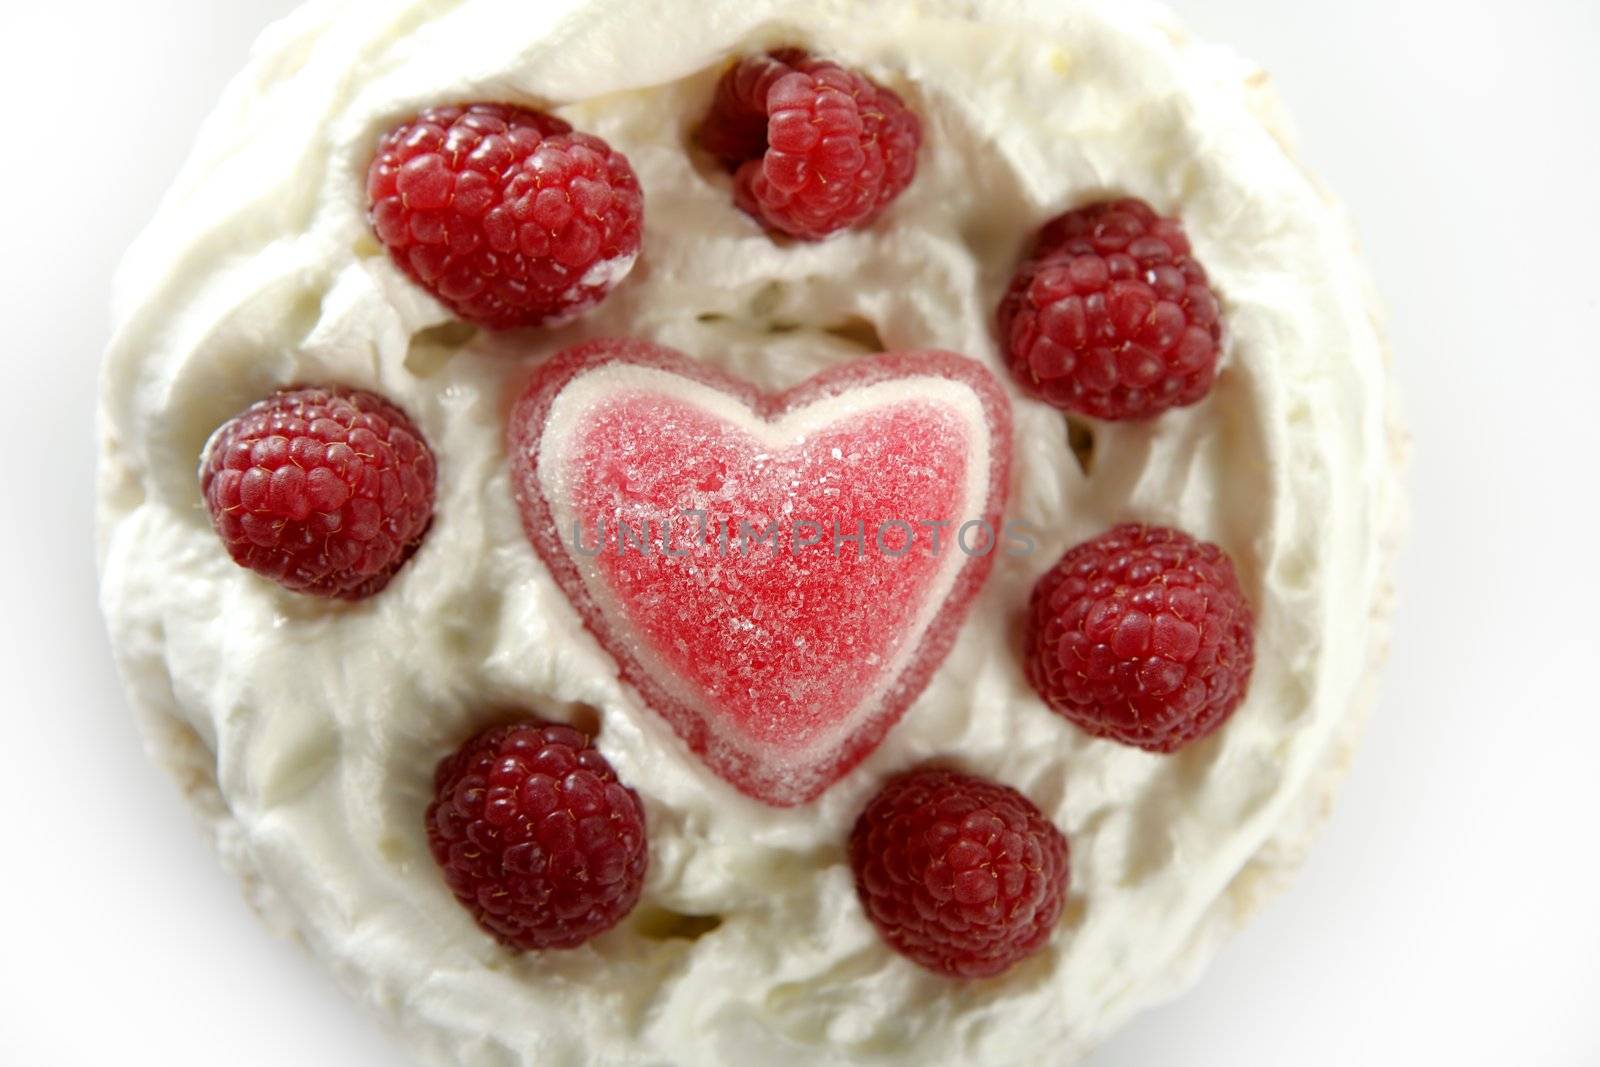 Jelly hearth cream cake with raspberries by lunamarina